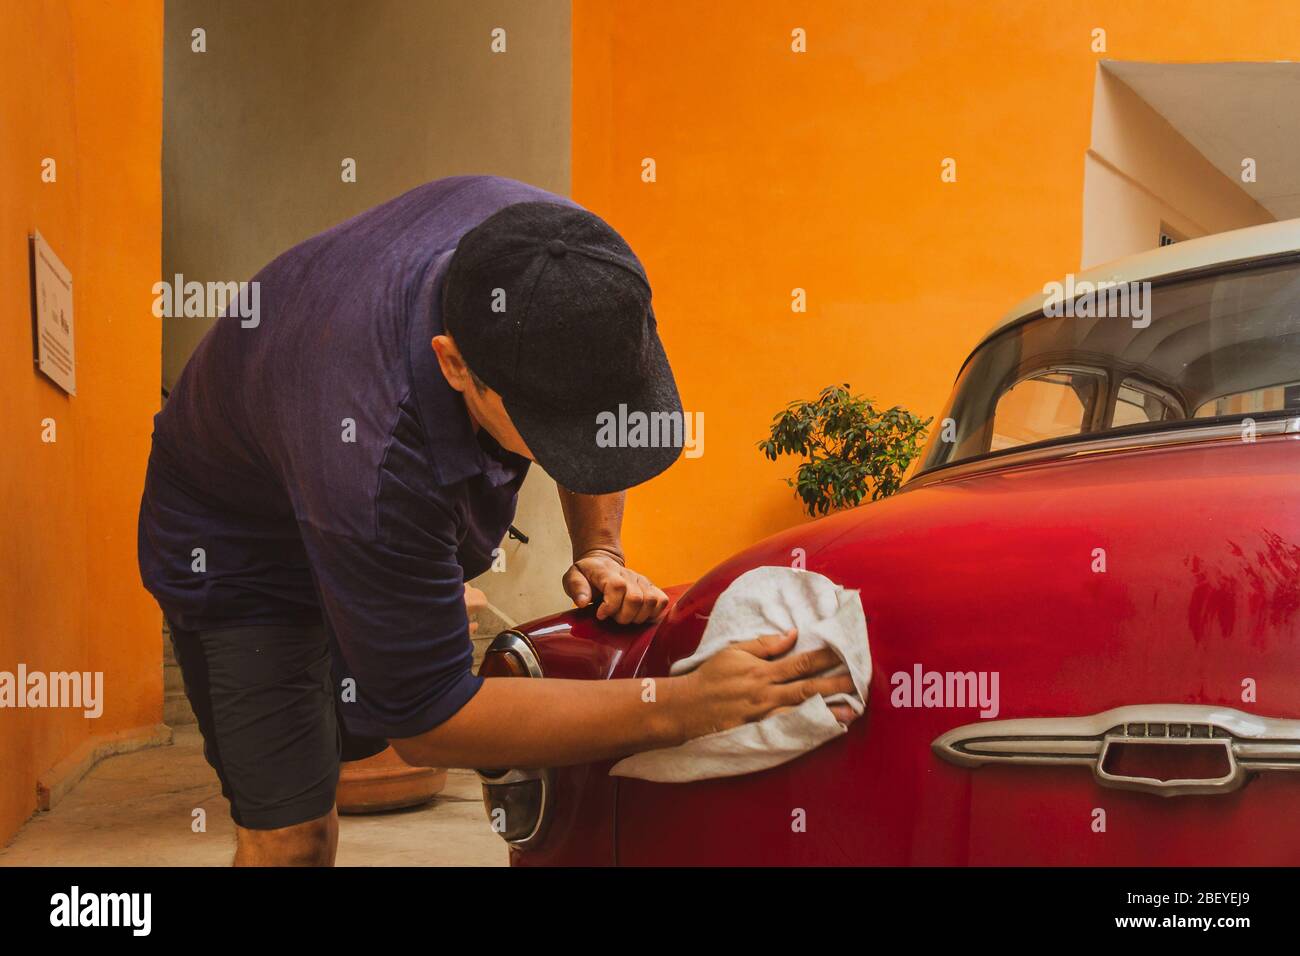 Persona lucidare la sua Chevrolet Vintage Belair classica auto, Havana città vecchia, Cuba Foto Stock